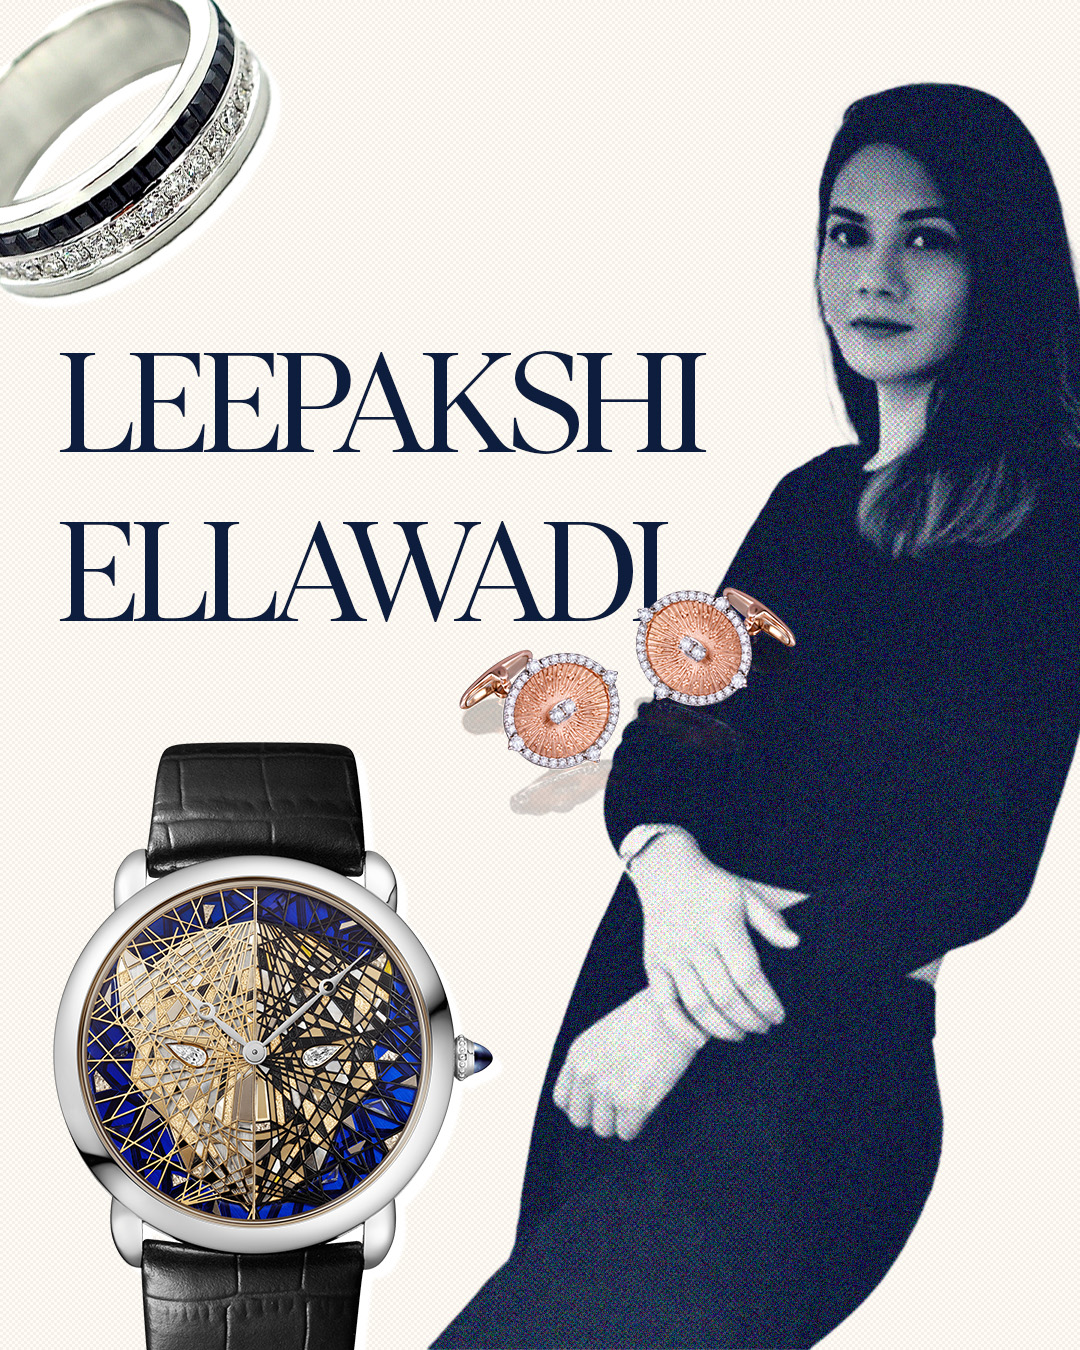 Leepakshi Ellawadi on men's jewellery